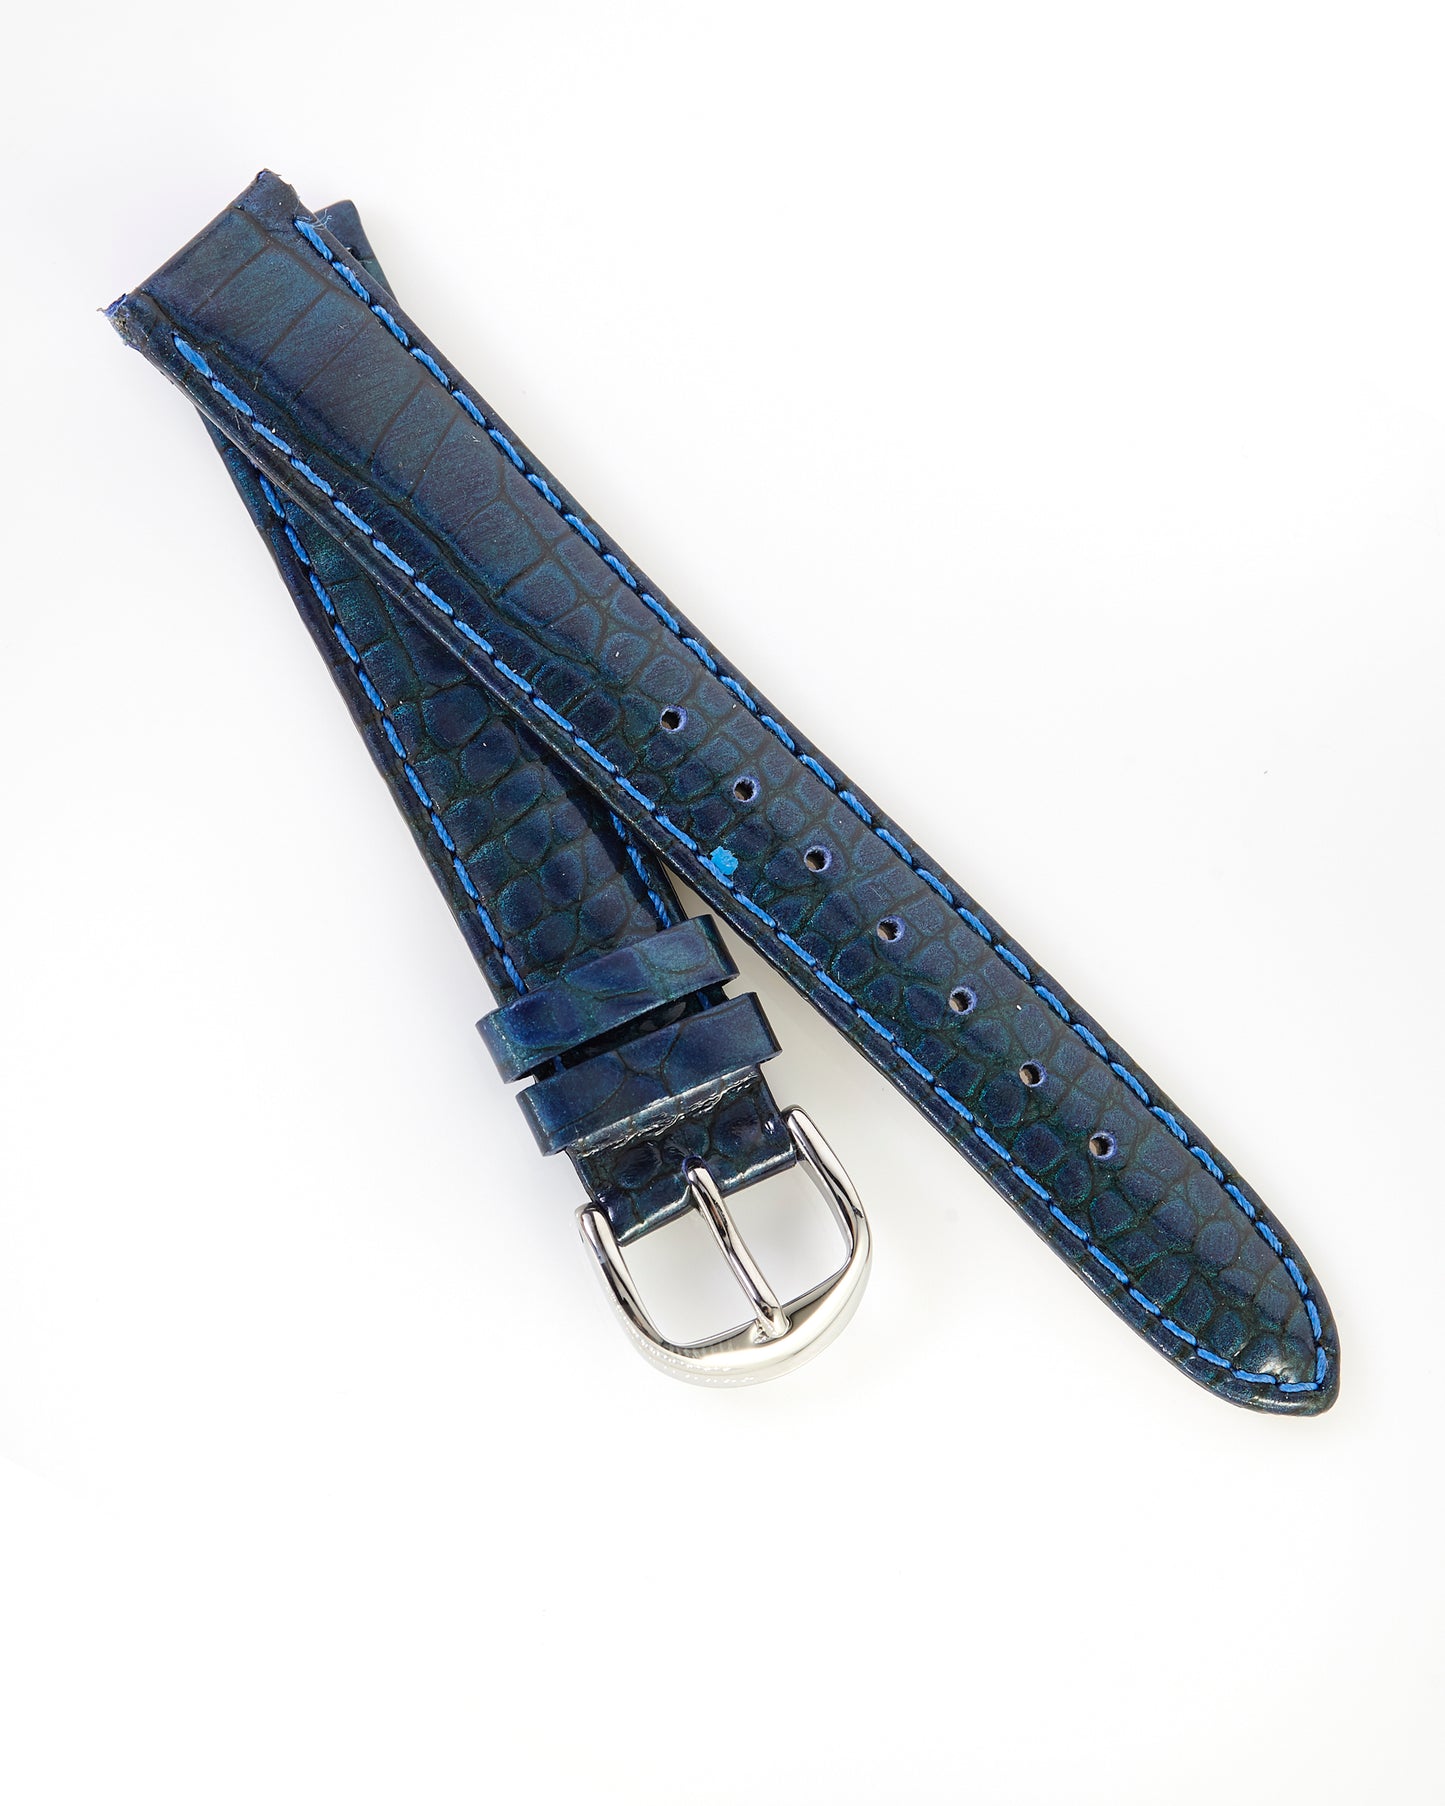 Ecclissi 16mm x 14mm Blue Shiny Leather Crocodile Grain Strap original Buckle 23515